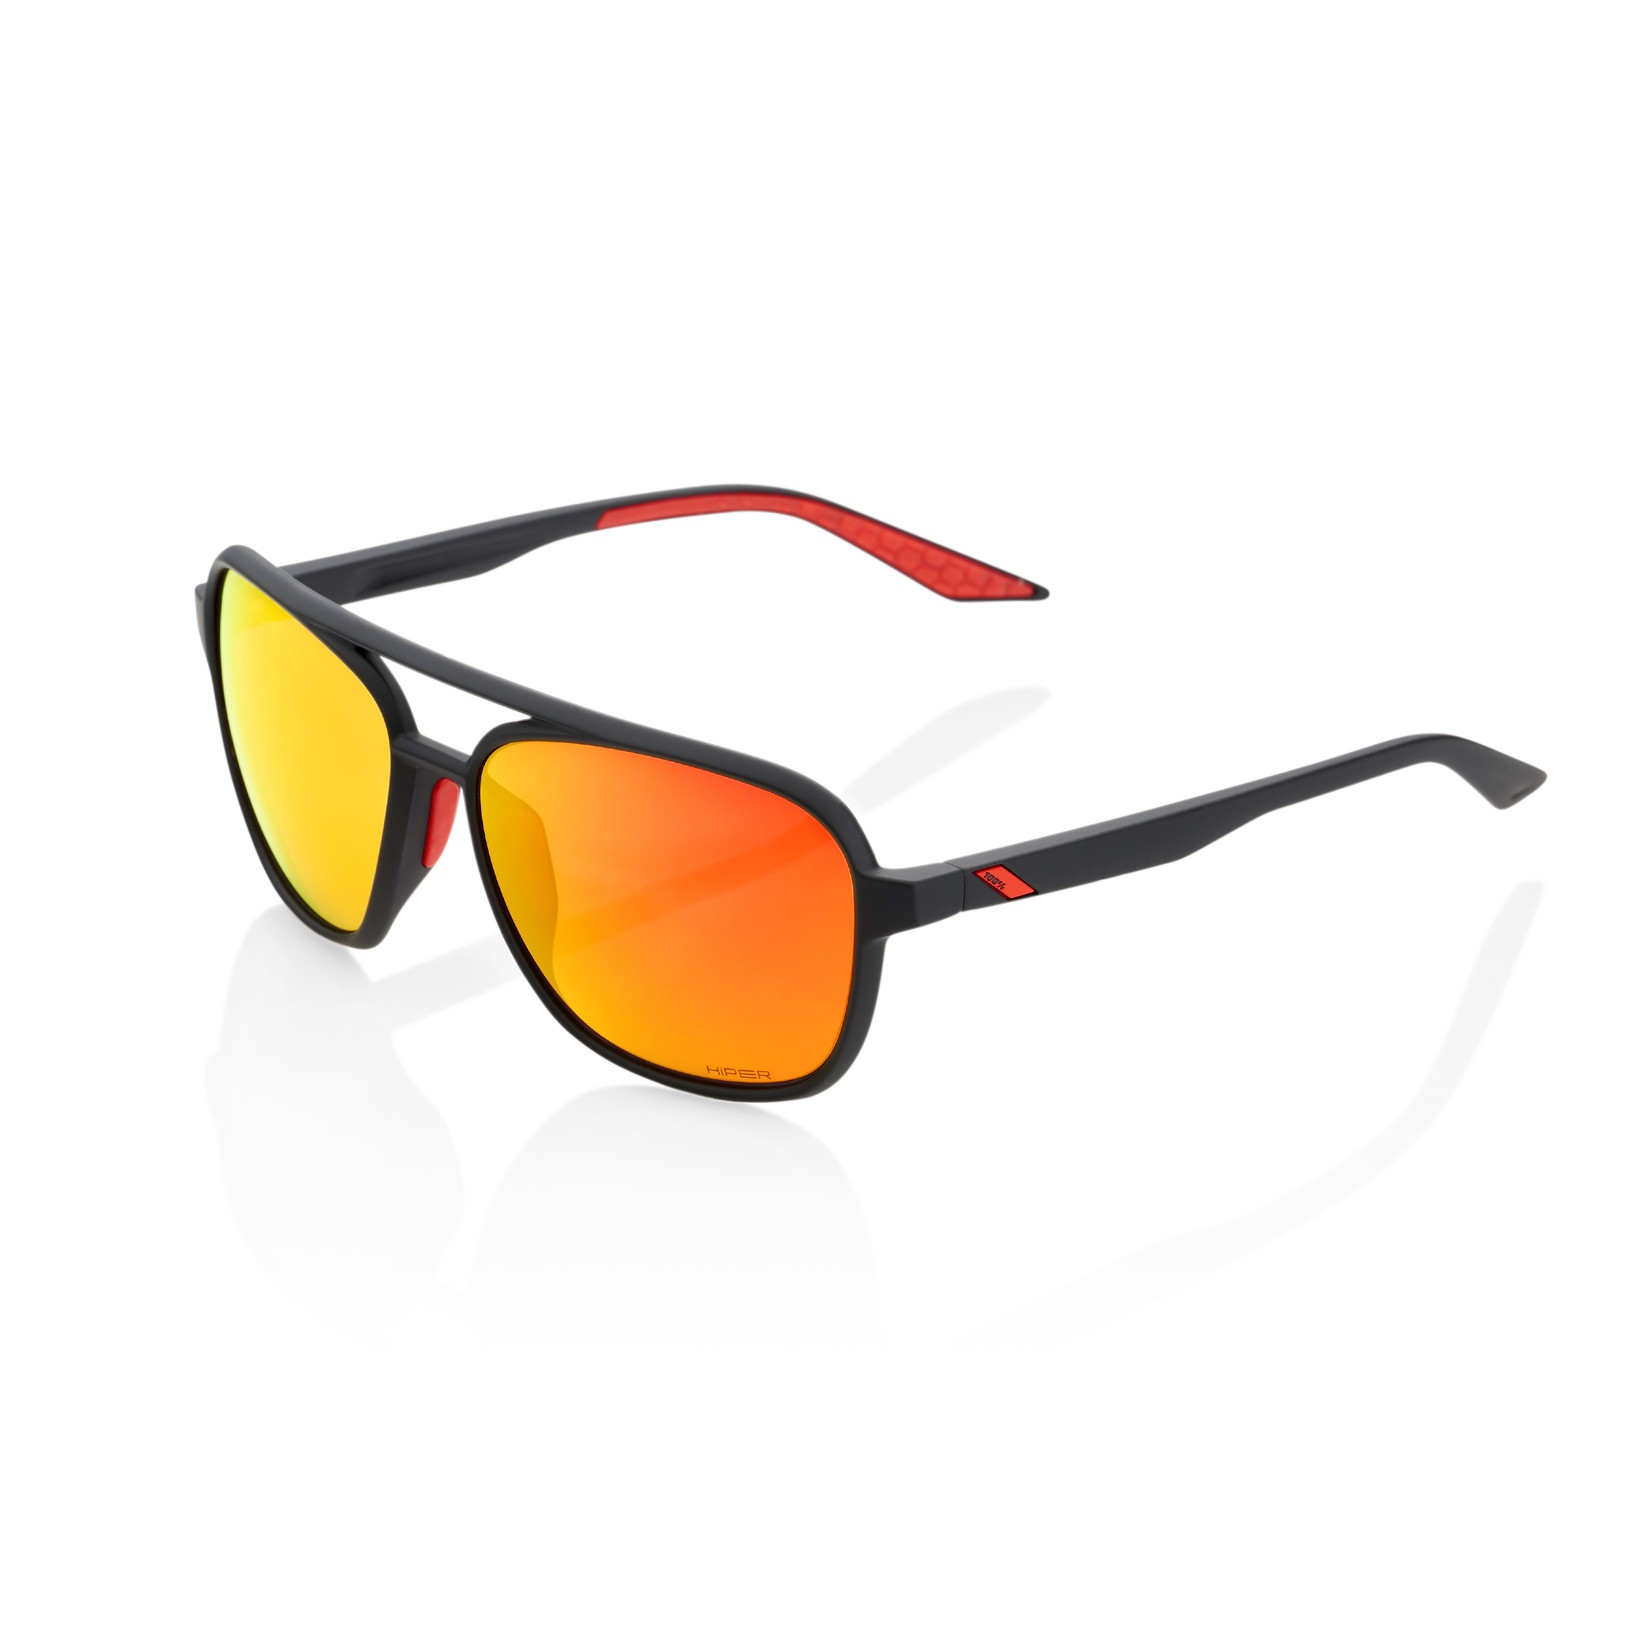 1 100% Kasia Sunglasses Soft Tact Black - Hiper Red